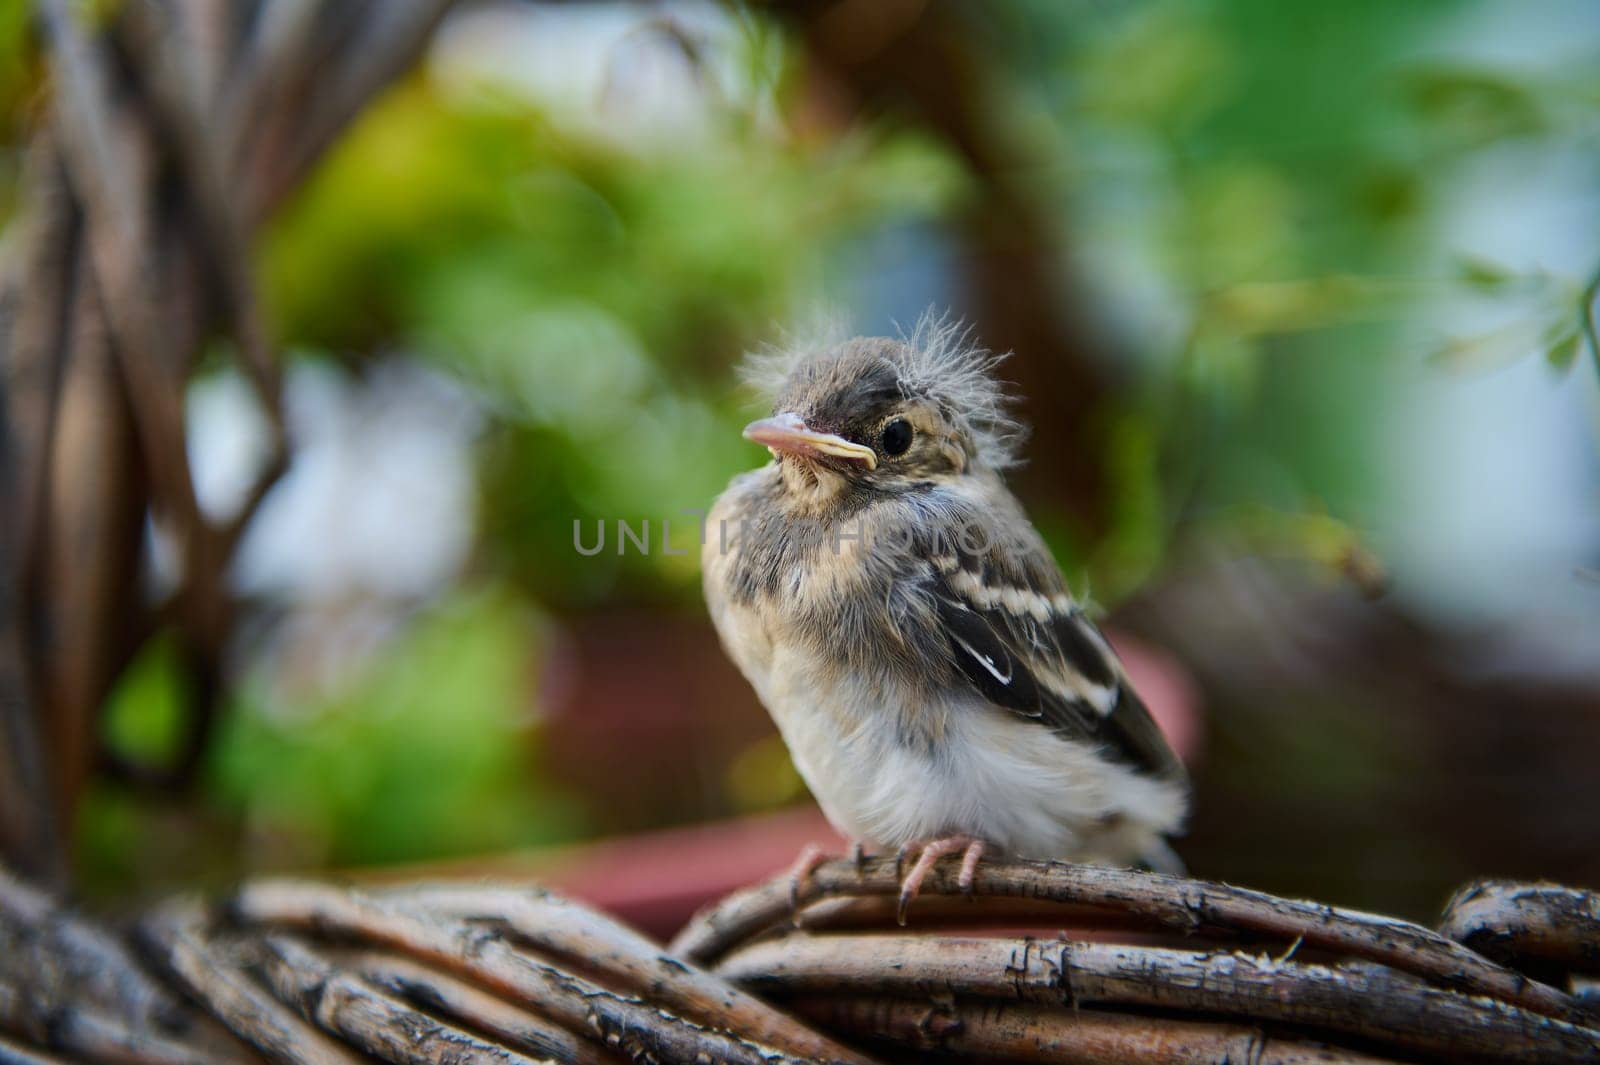 Cute baby bird sitting on wicker basket outdoors. by artgf